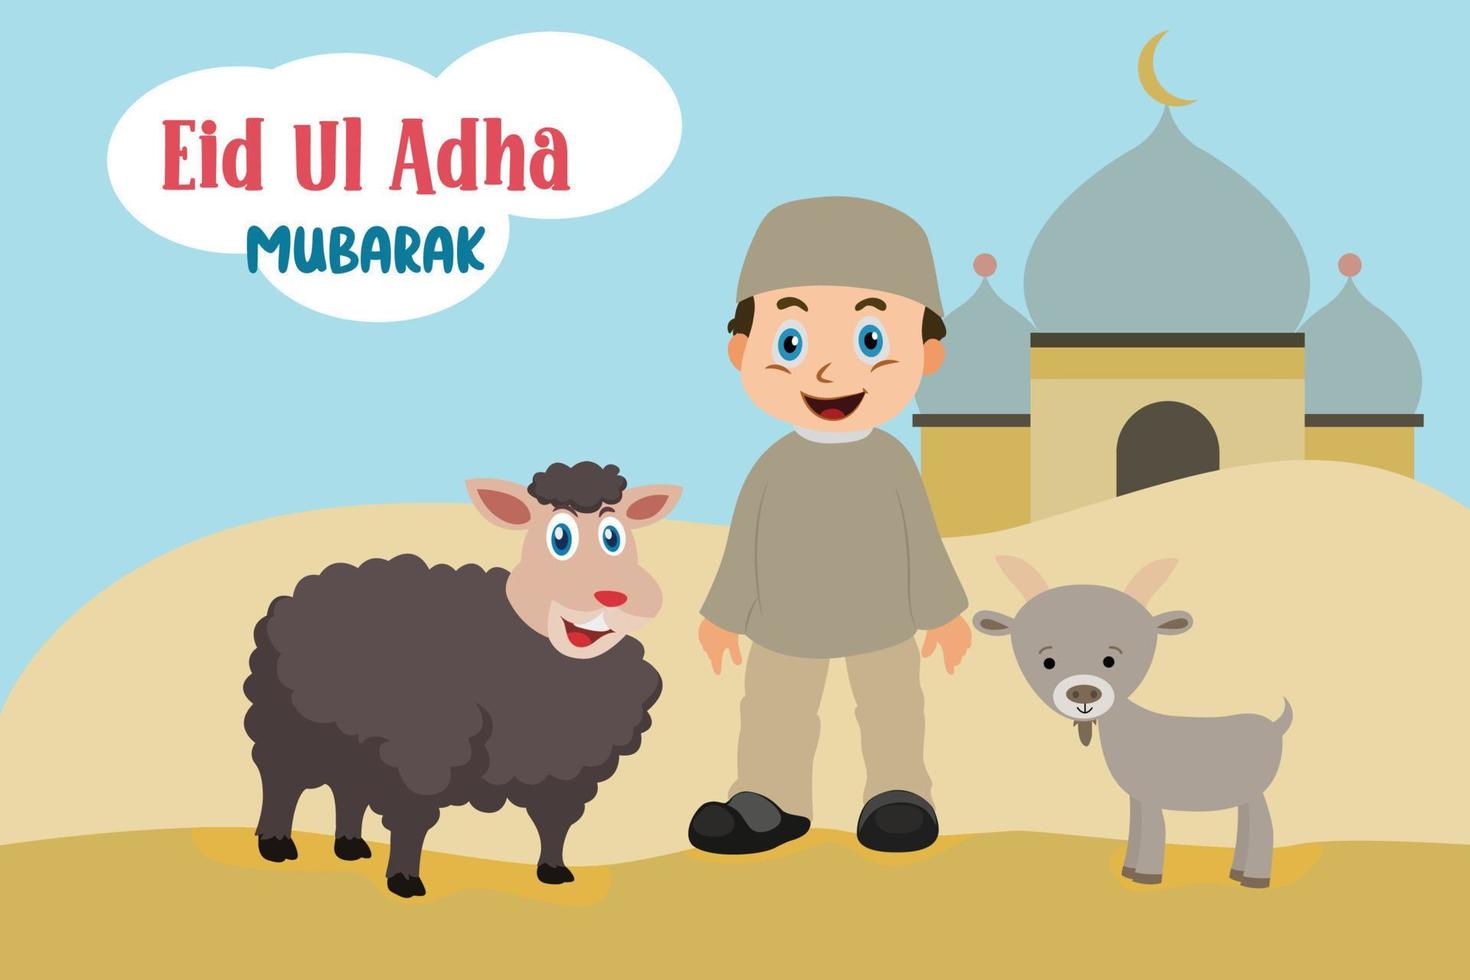 Eid Al Adha mubarak greeting card with cute sheep, a boy and lamb. Vector illustration.